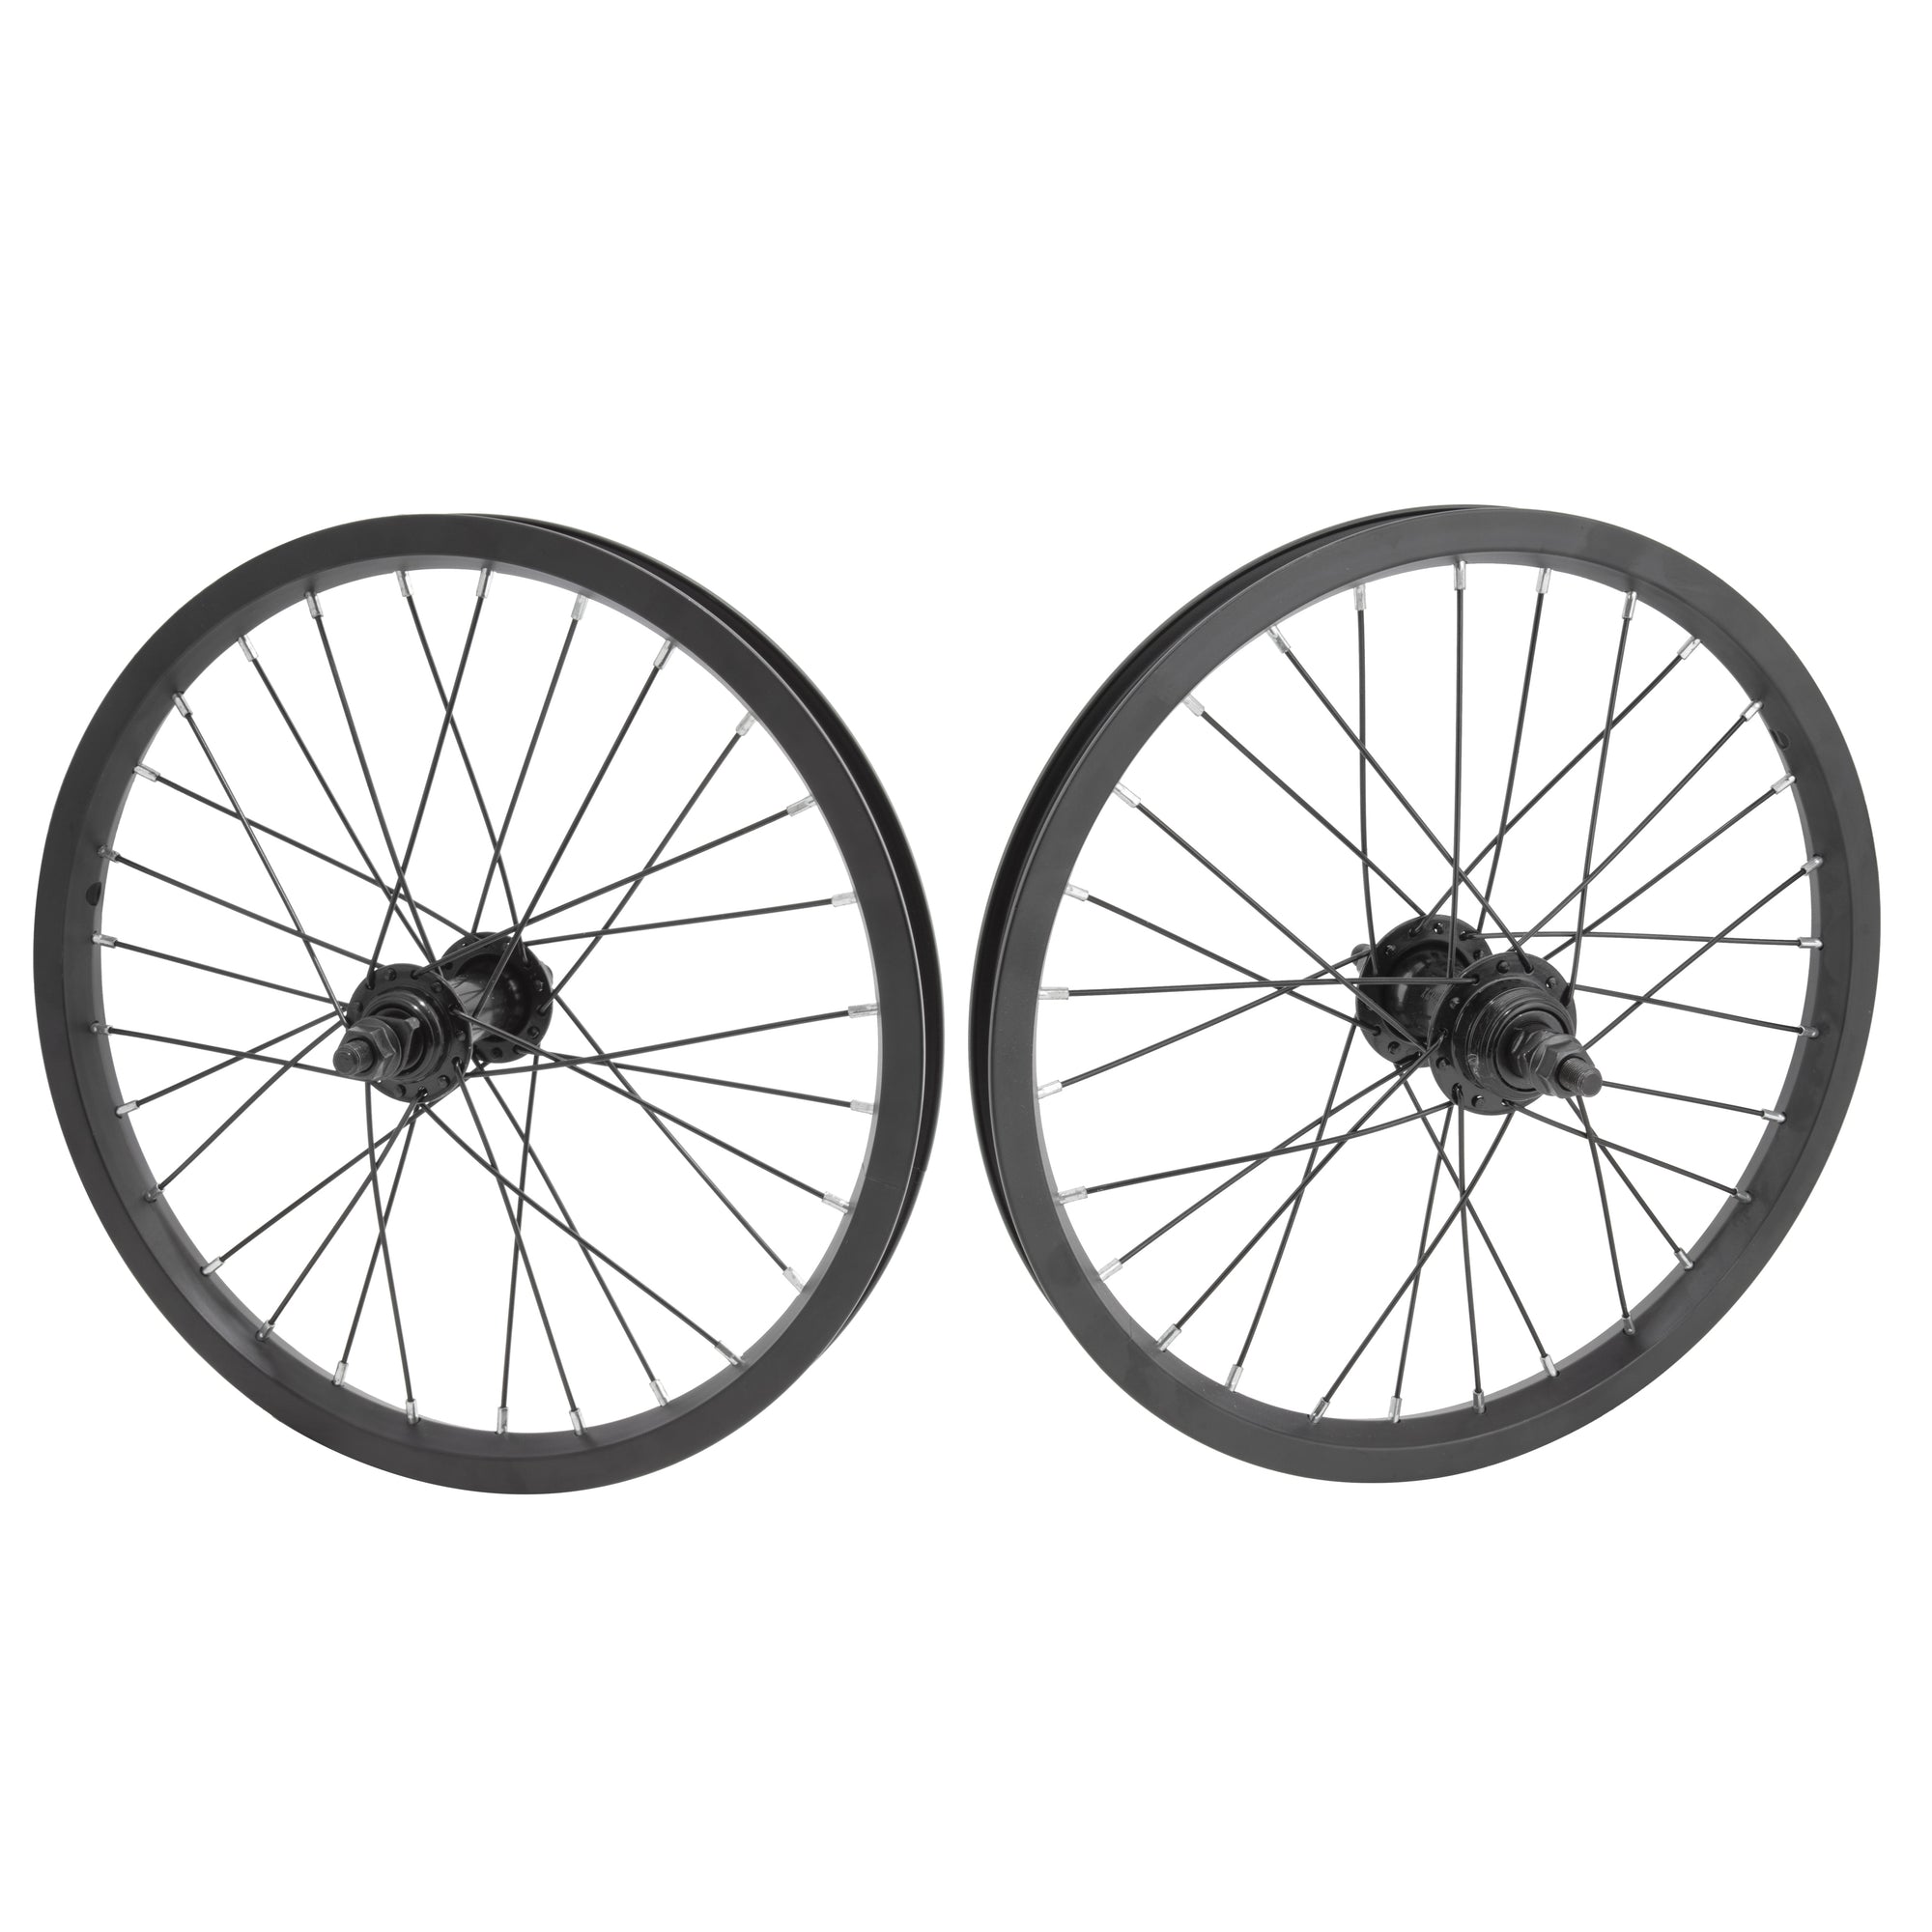 16" Aluminum BMX Wheelset - Freewheel - Pair - Black